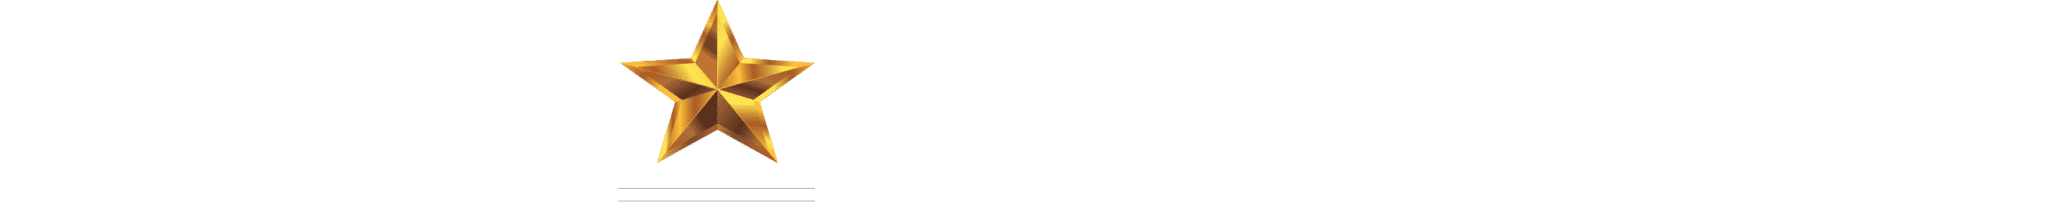 Sears Crawford logo